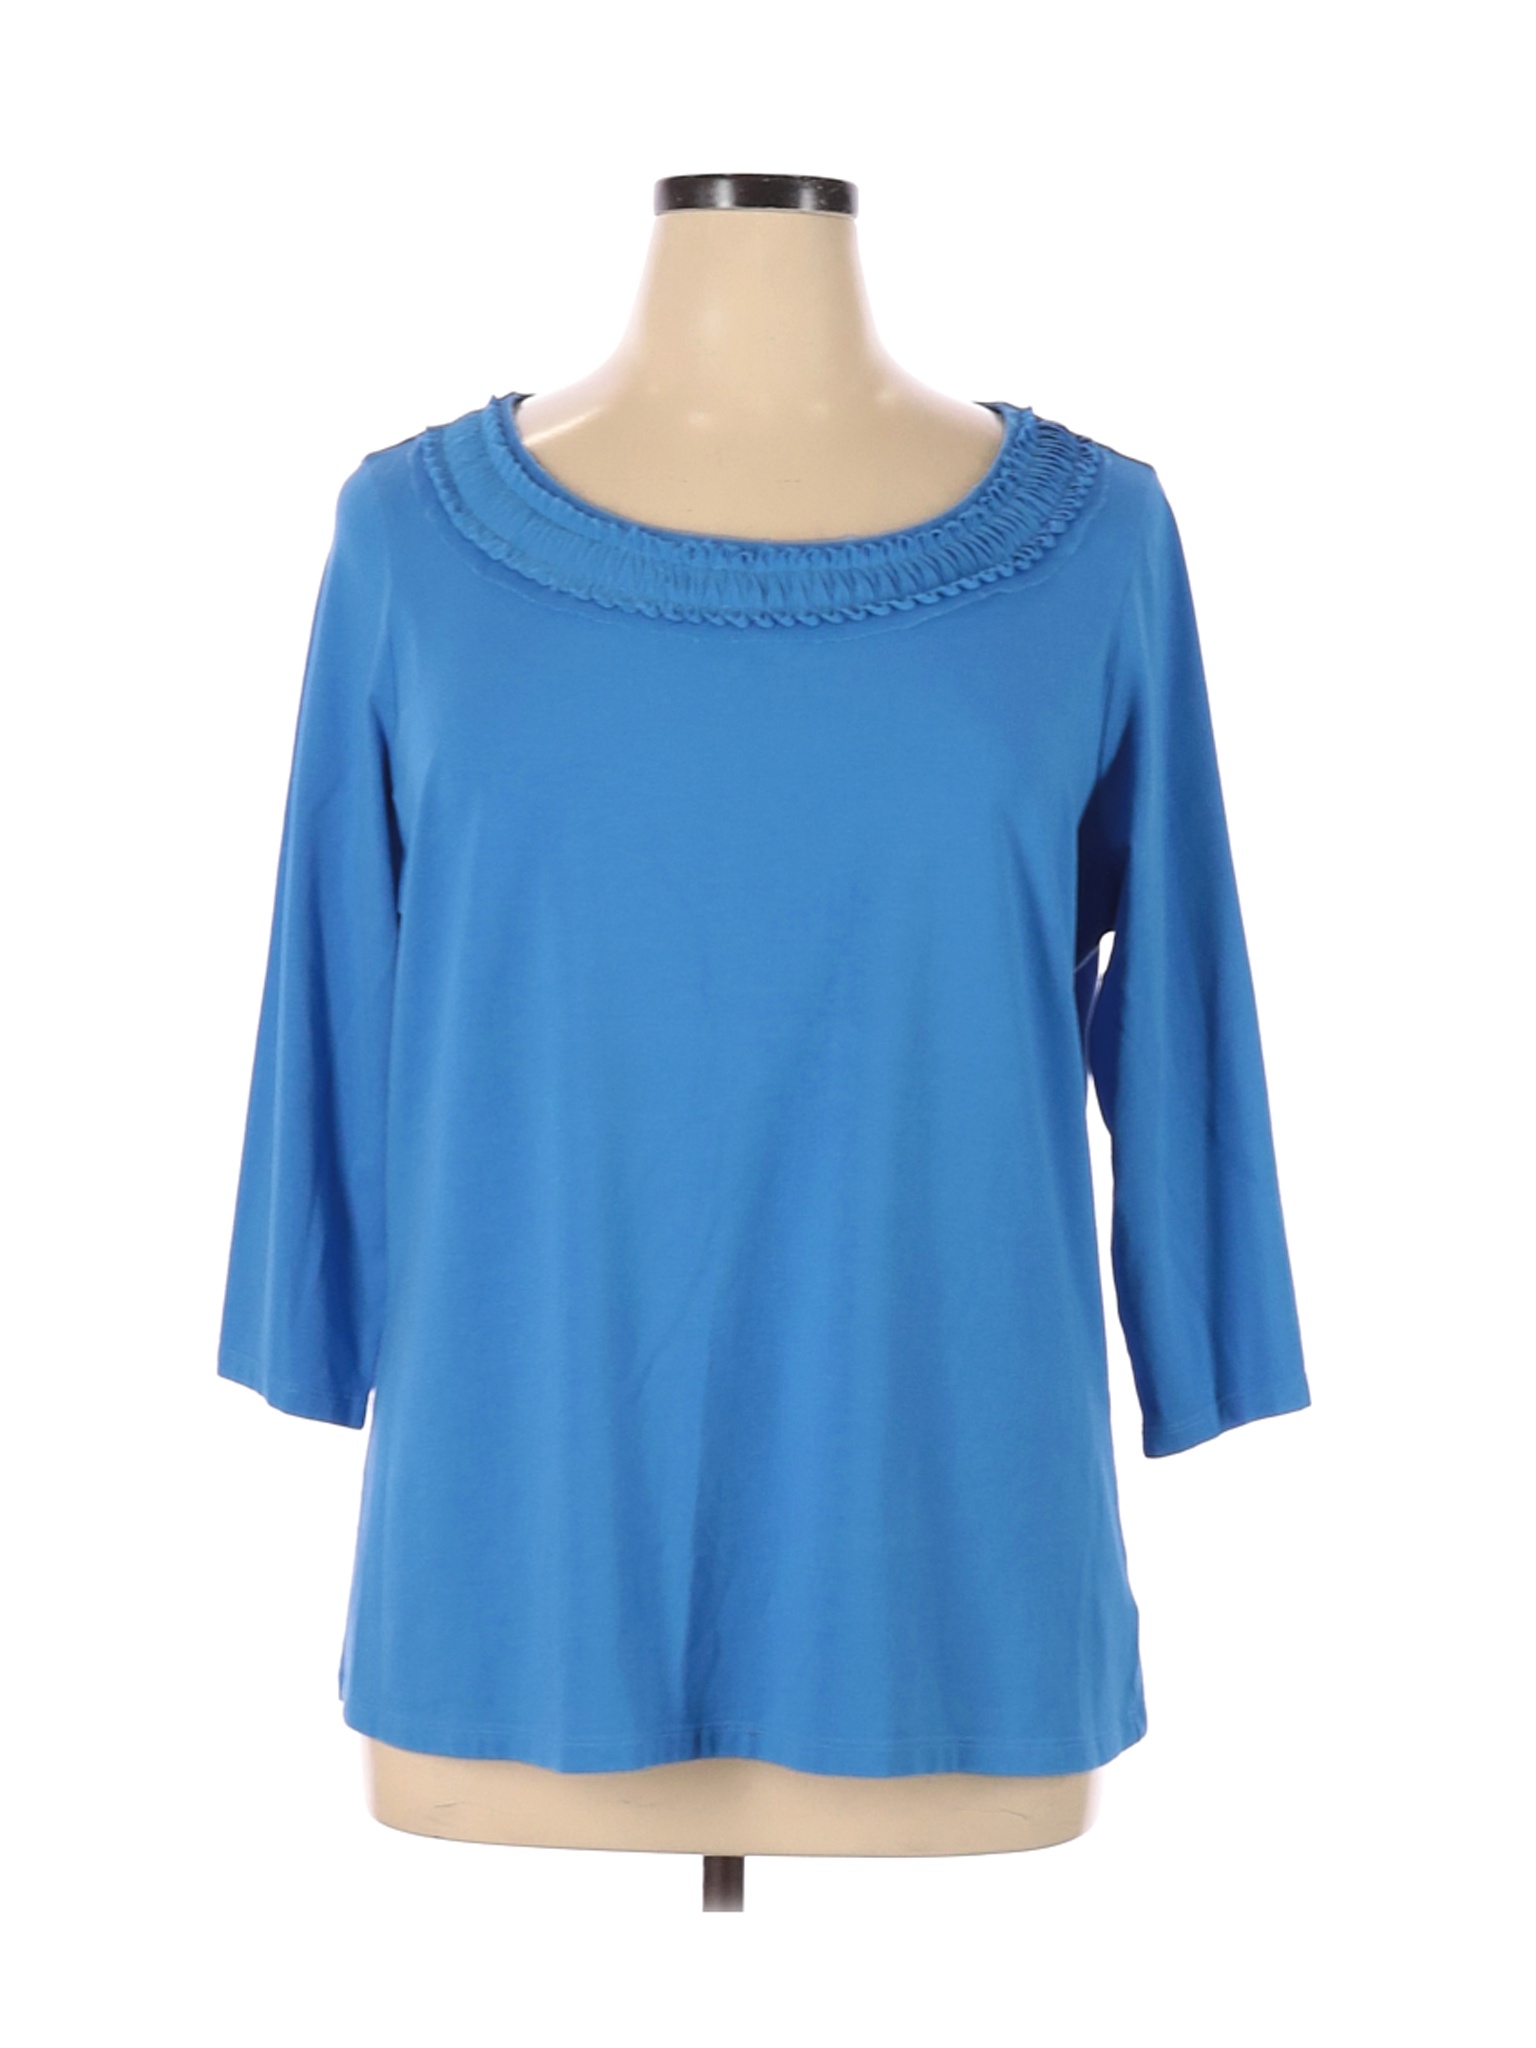 Coldwater Creek Women Blue 3/4 Sleeve Top 1X Plus | eBay